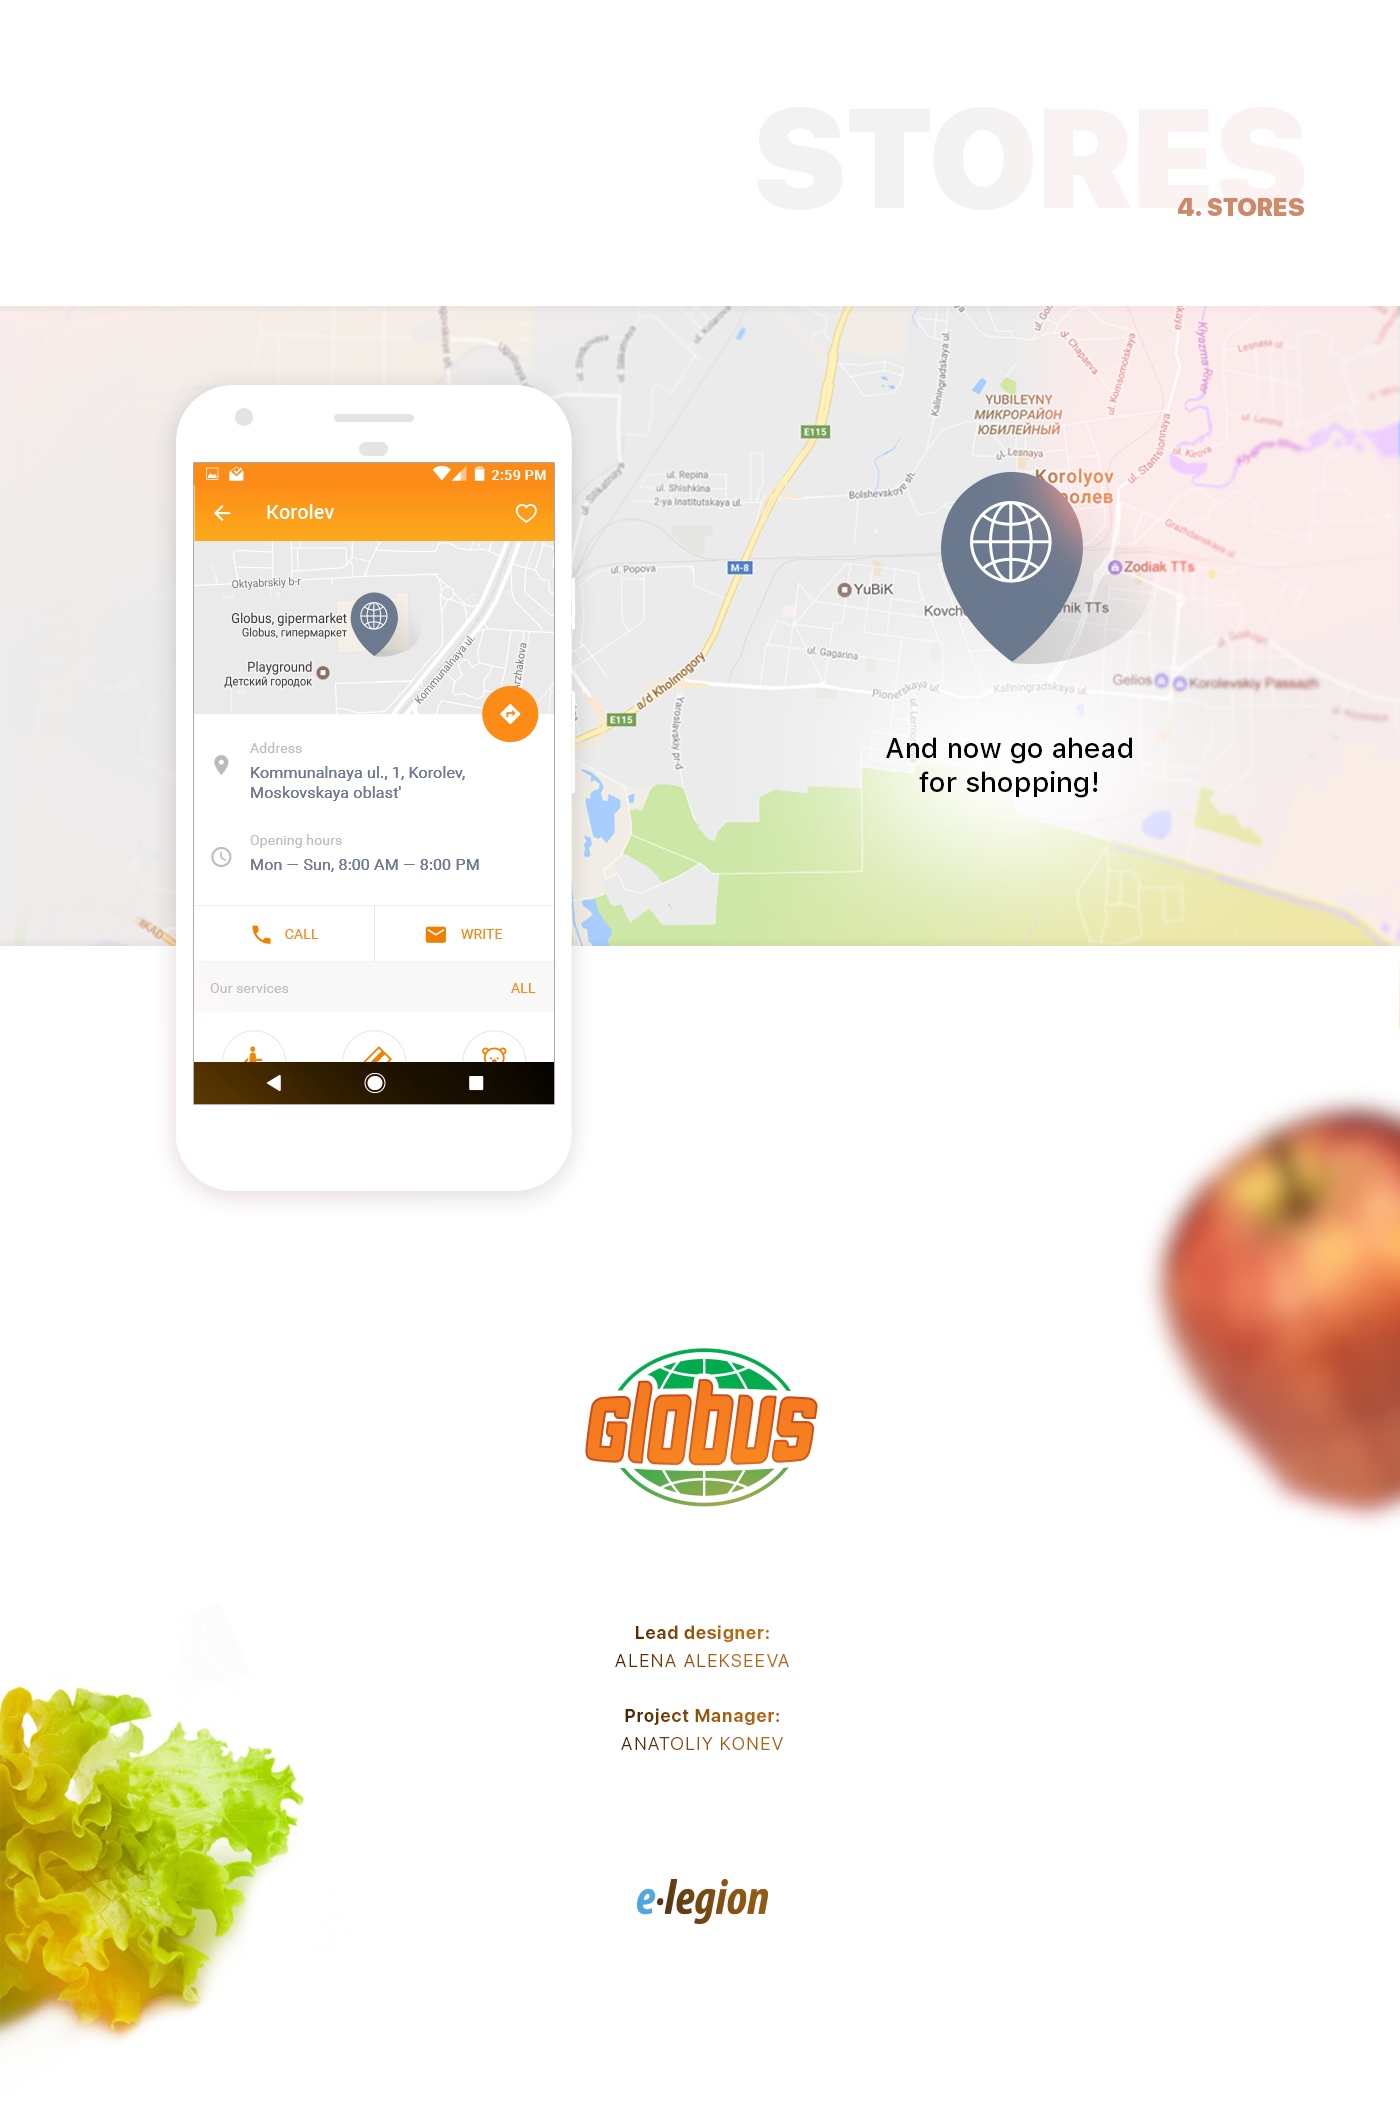 ios android Mobie e-legion elegion legion Food  app Globus market